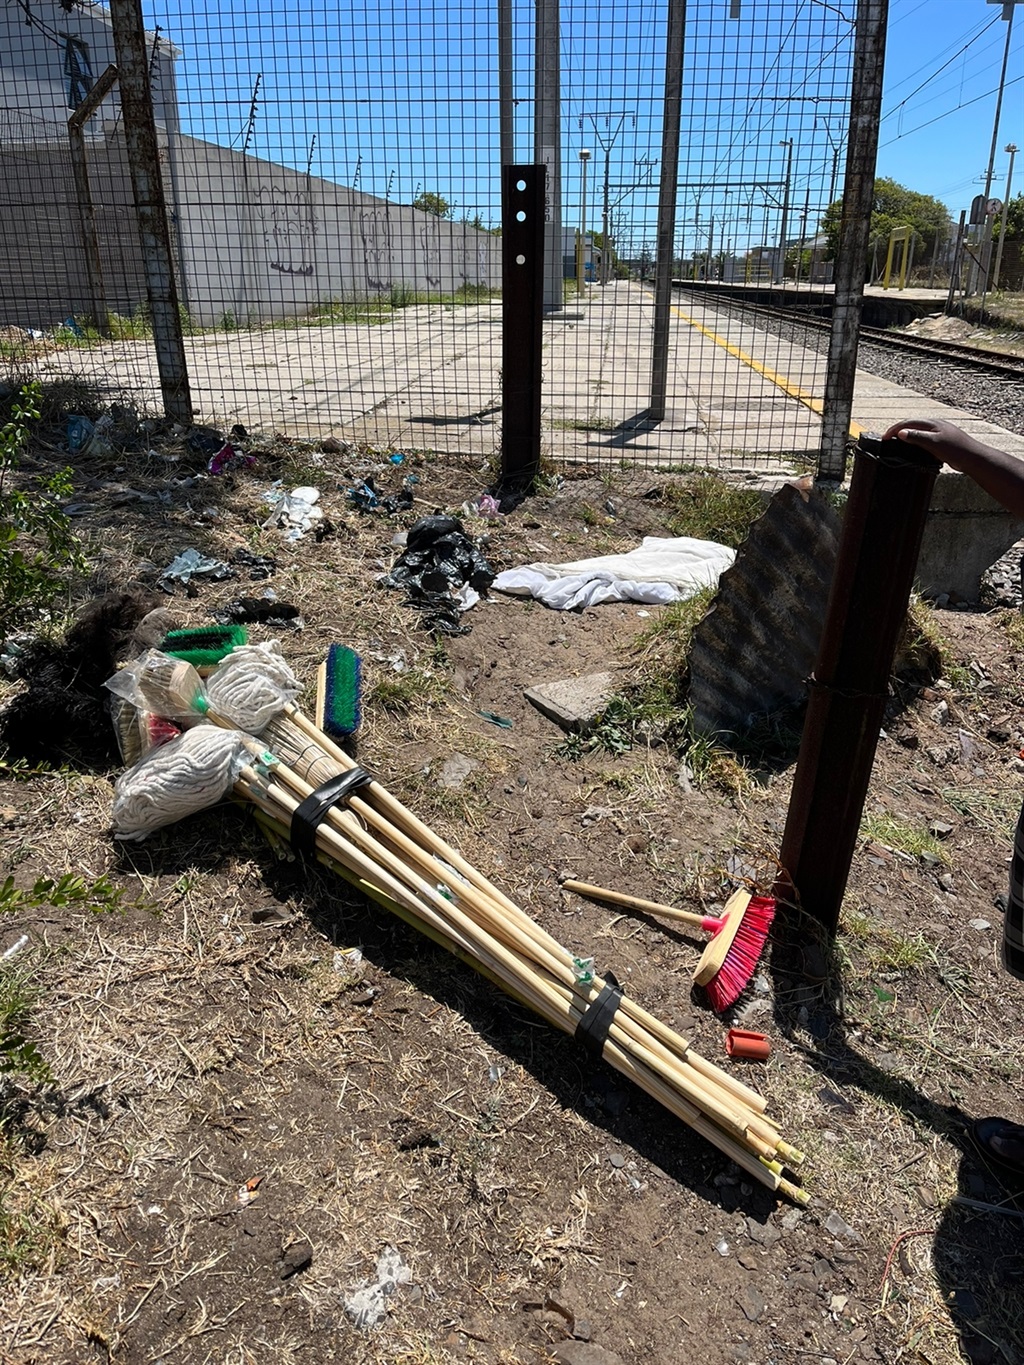 Tied up bundle of brooms on ground near railway li